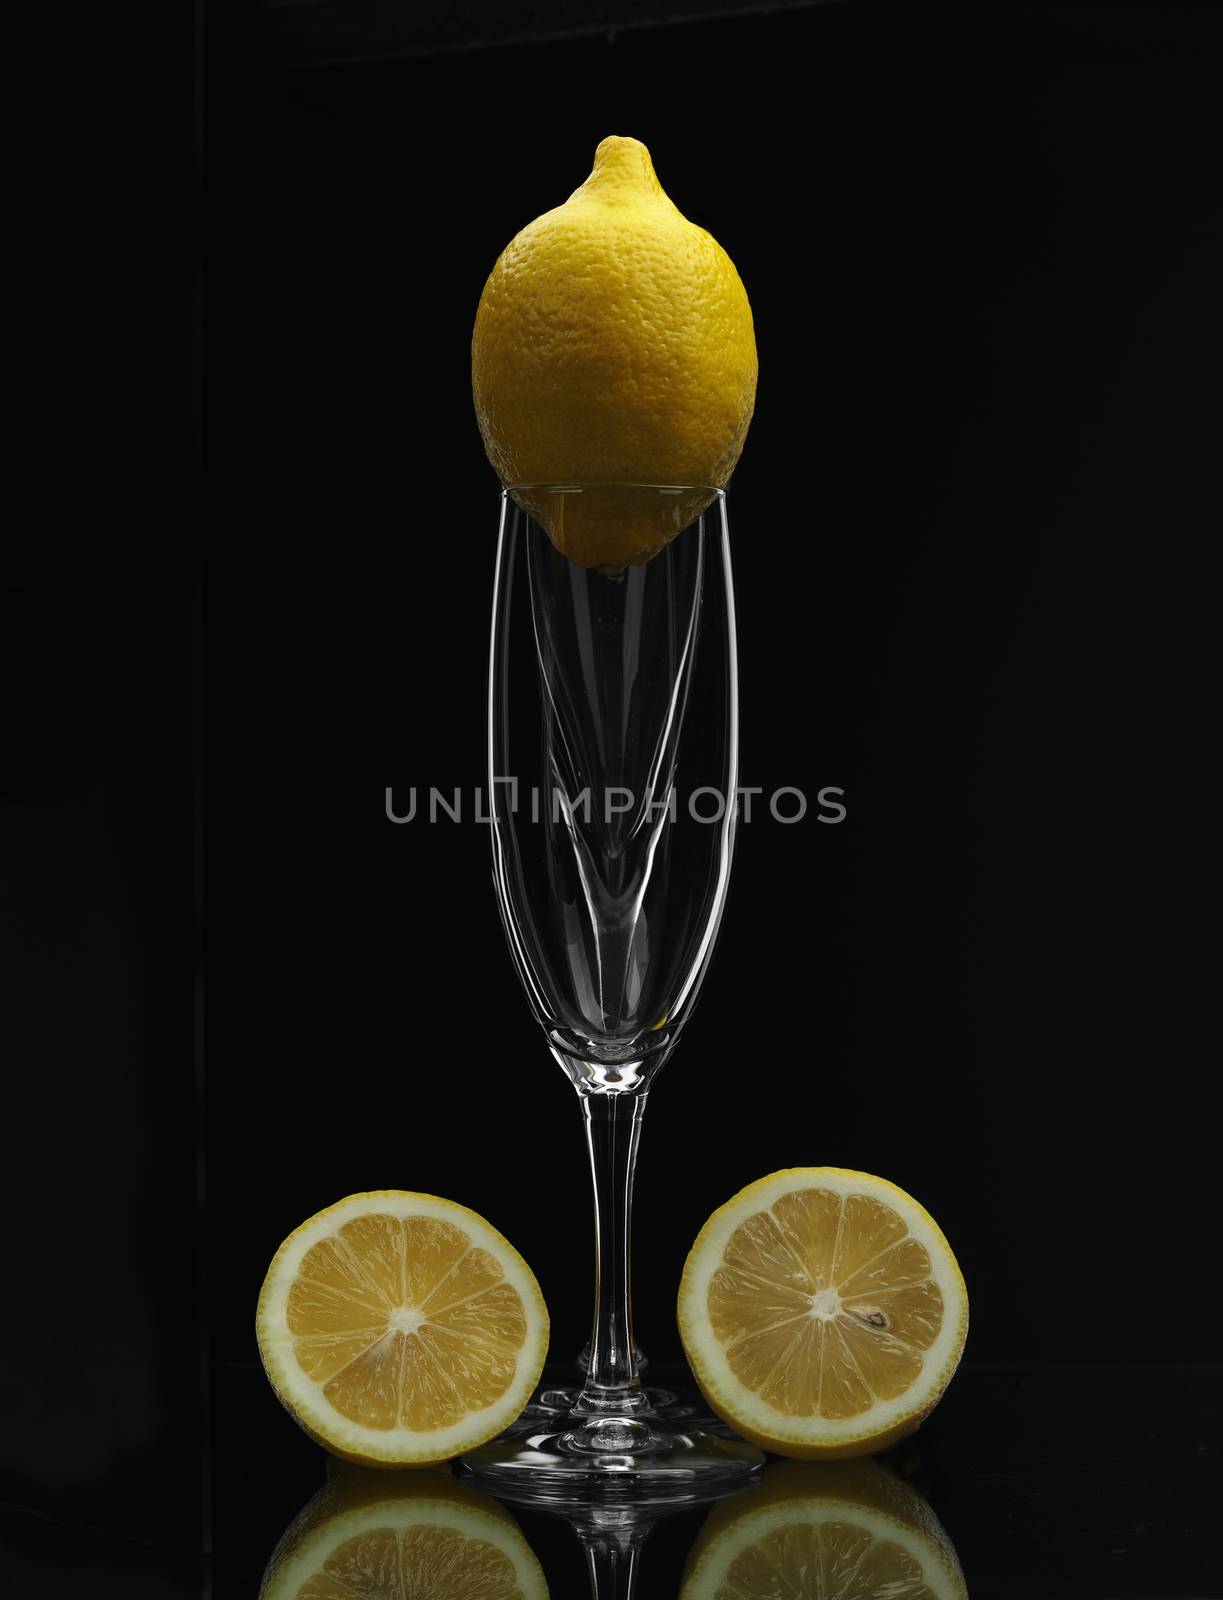 lemon on champagne glass over black background

